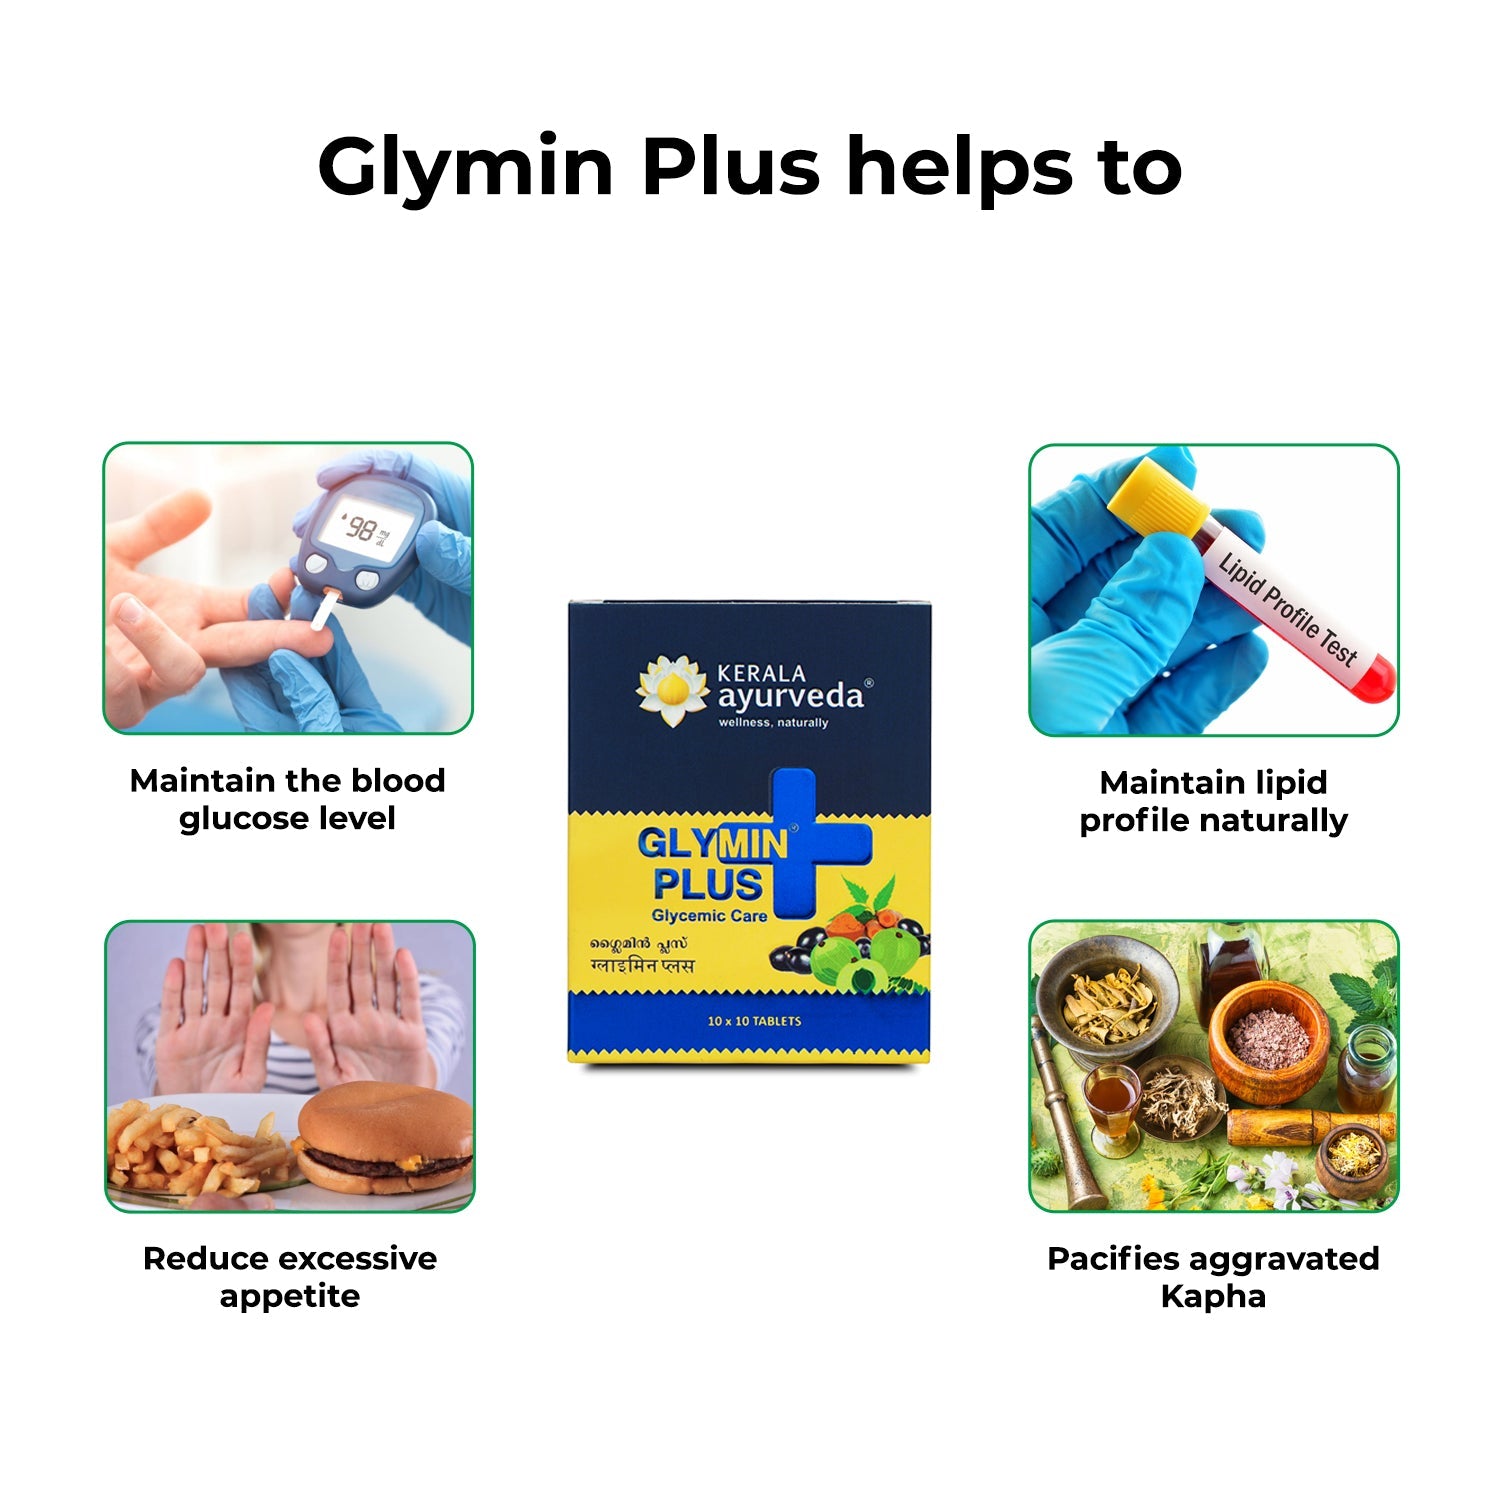 Kerala Ayurveda Glymin Plus Tablets - 100 tabs